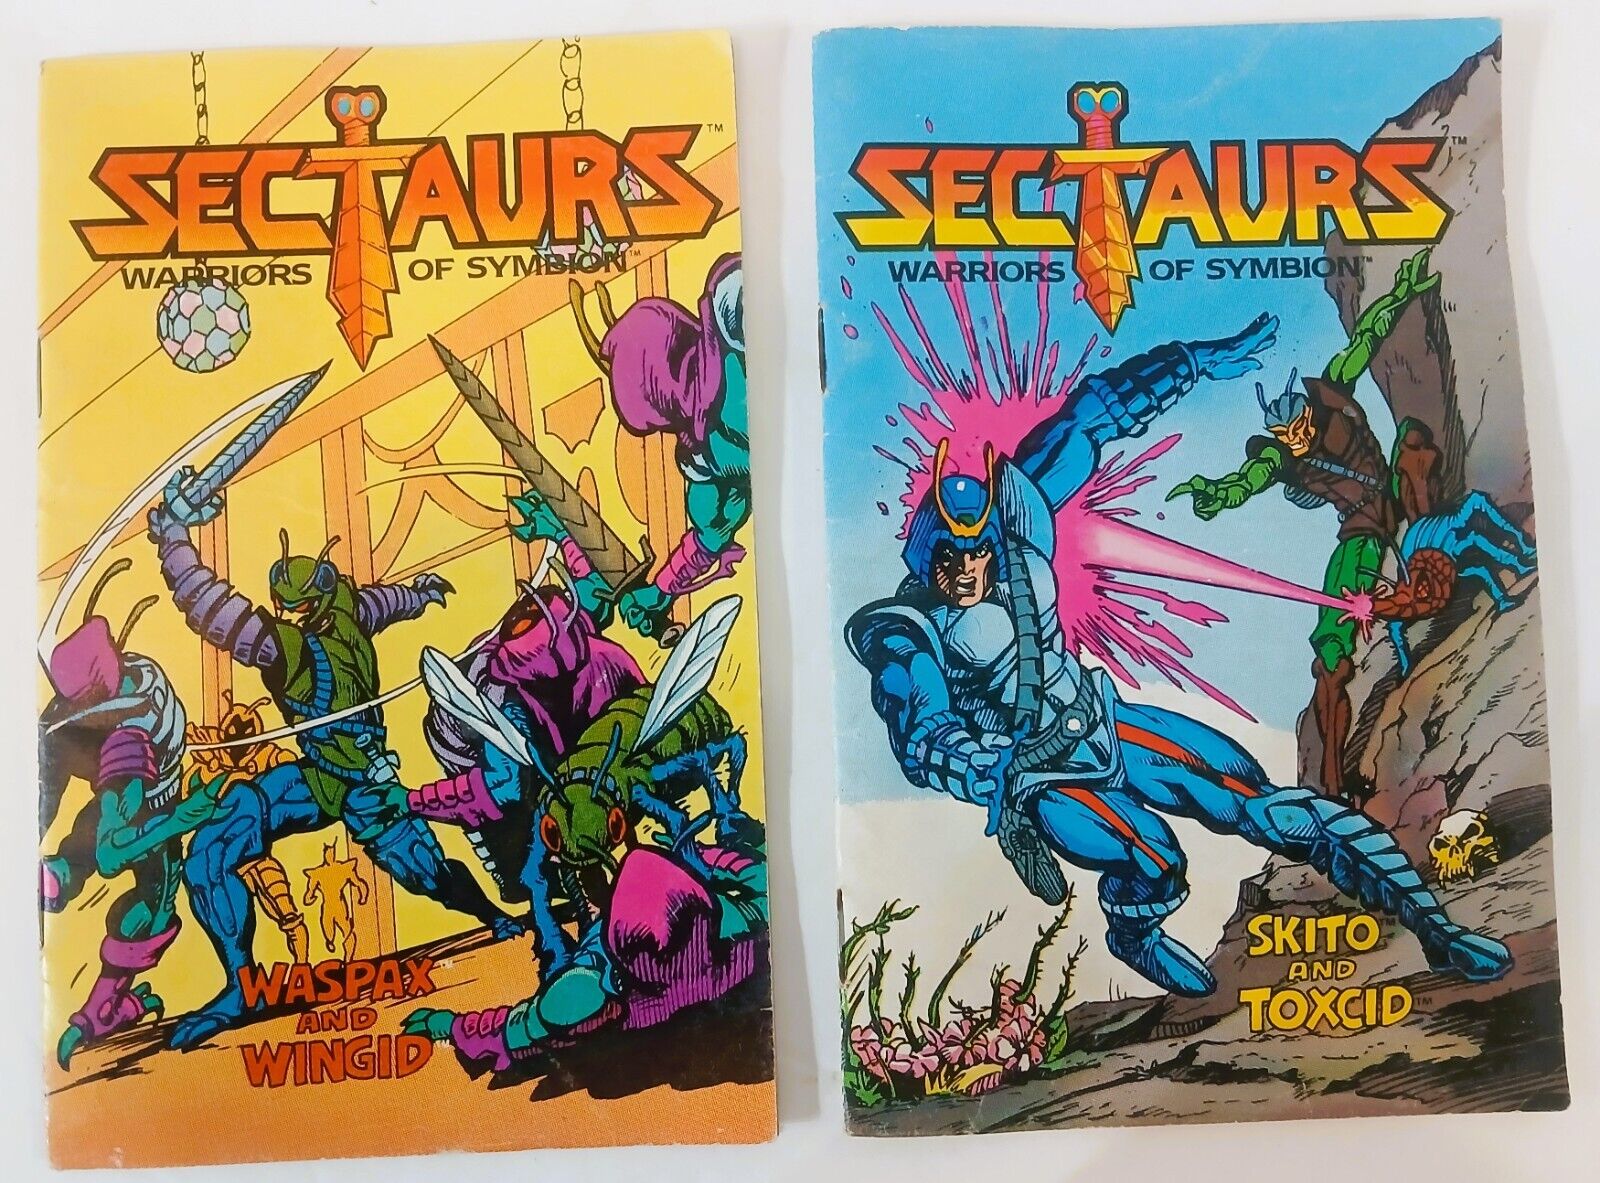 Sectaurs Warriors of Symbion Skito &Toxcid WAXSPAX & WINGID Mini Comic BOOK